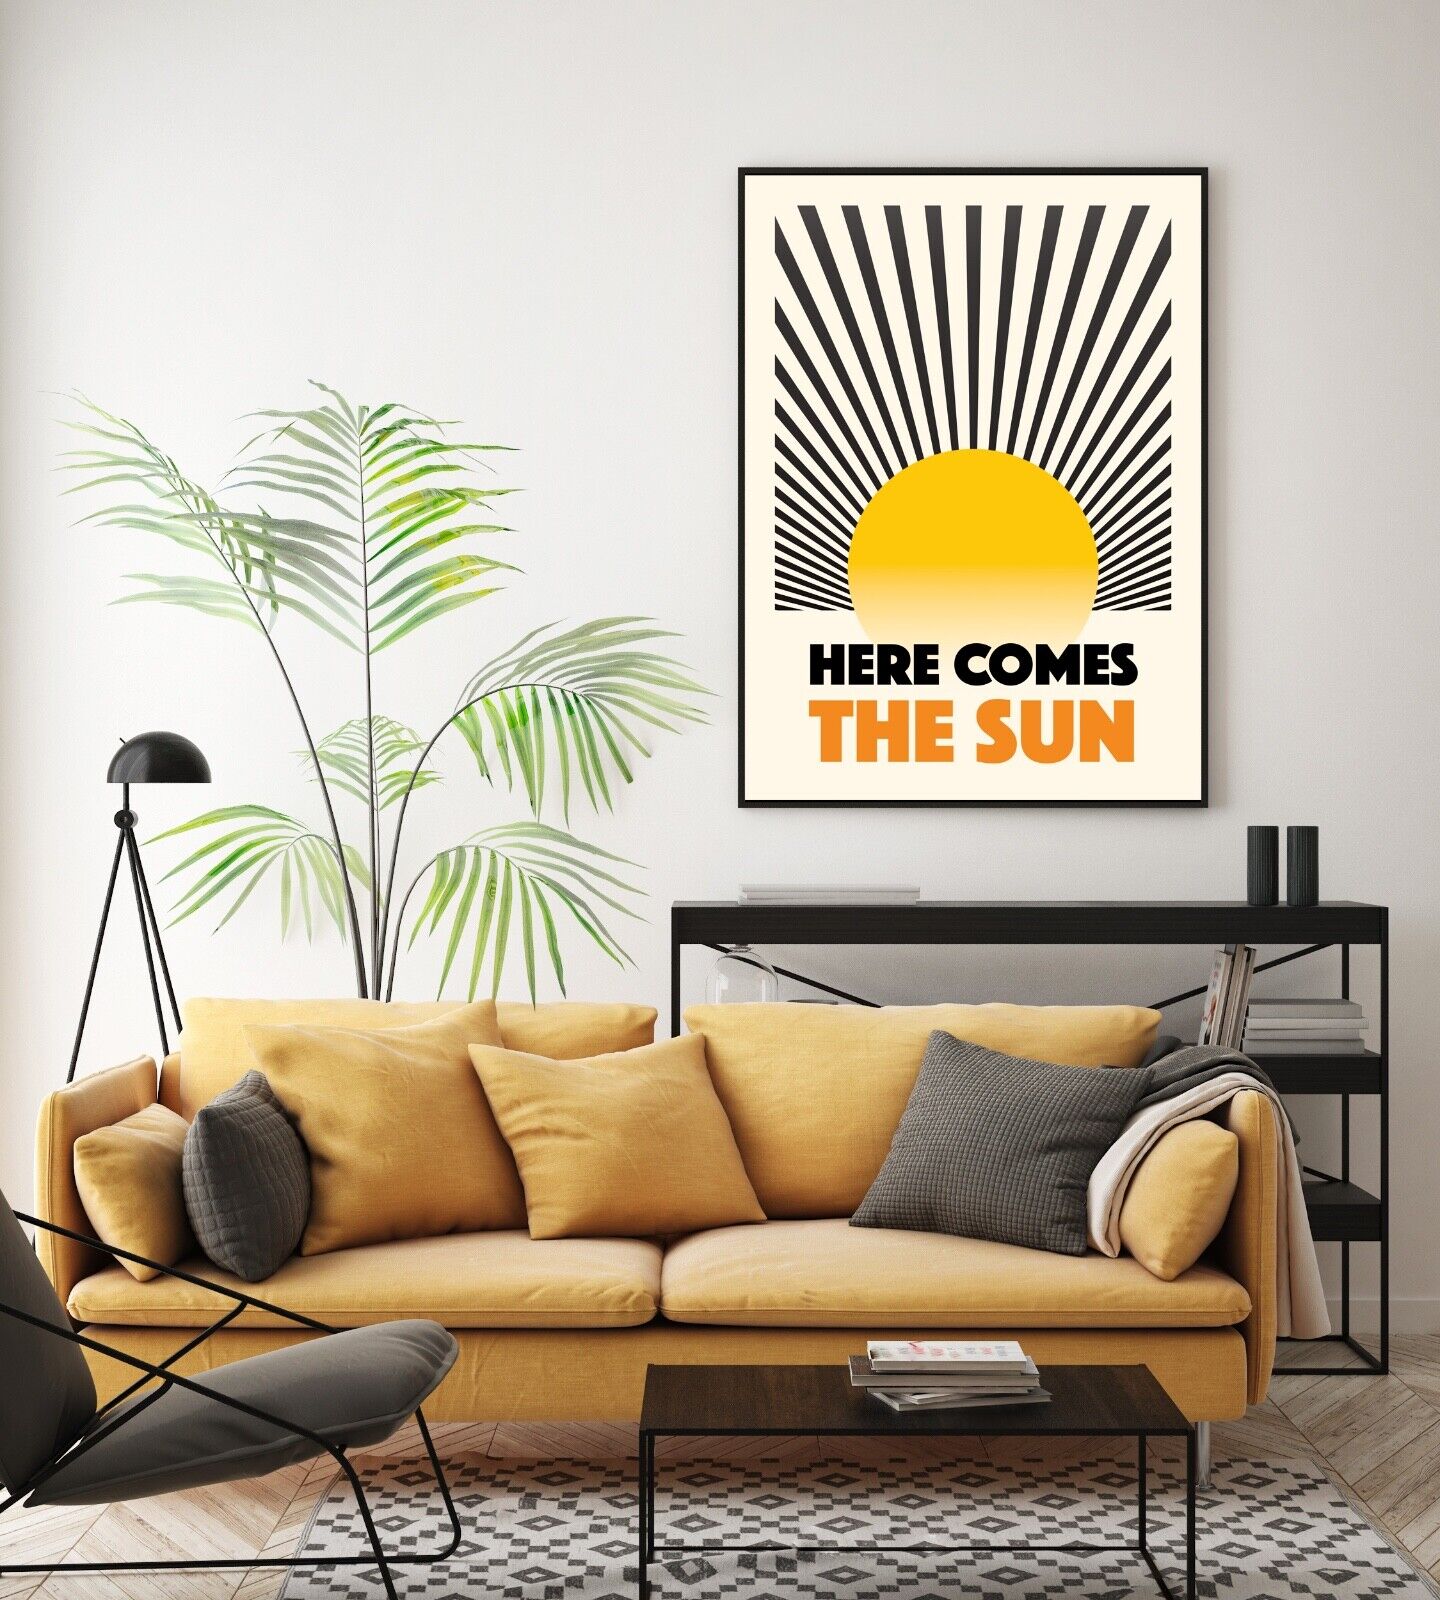 Here comes the Sun Art Print, Beatles Poster, Wall Art, Home Decor